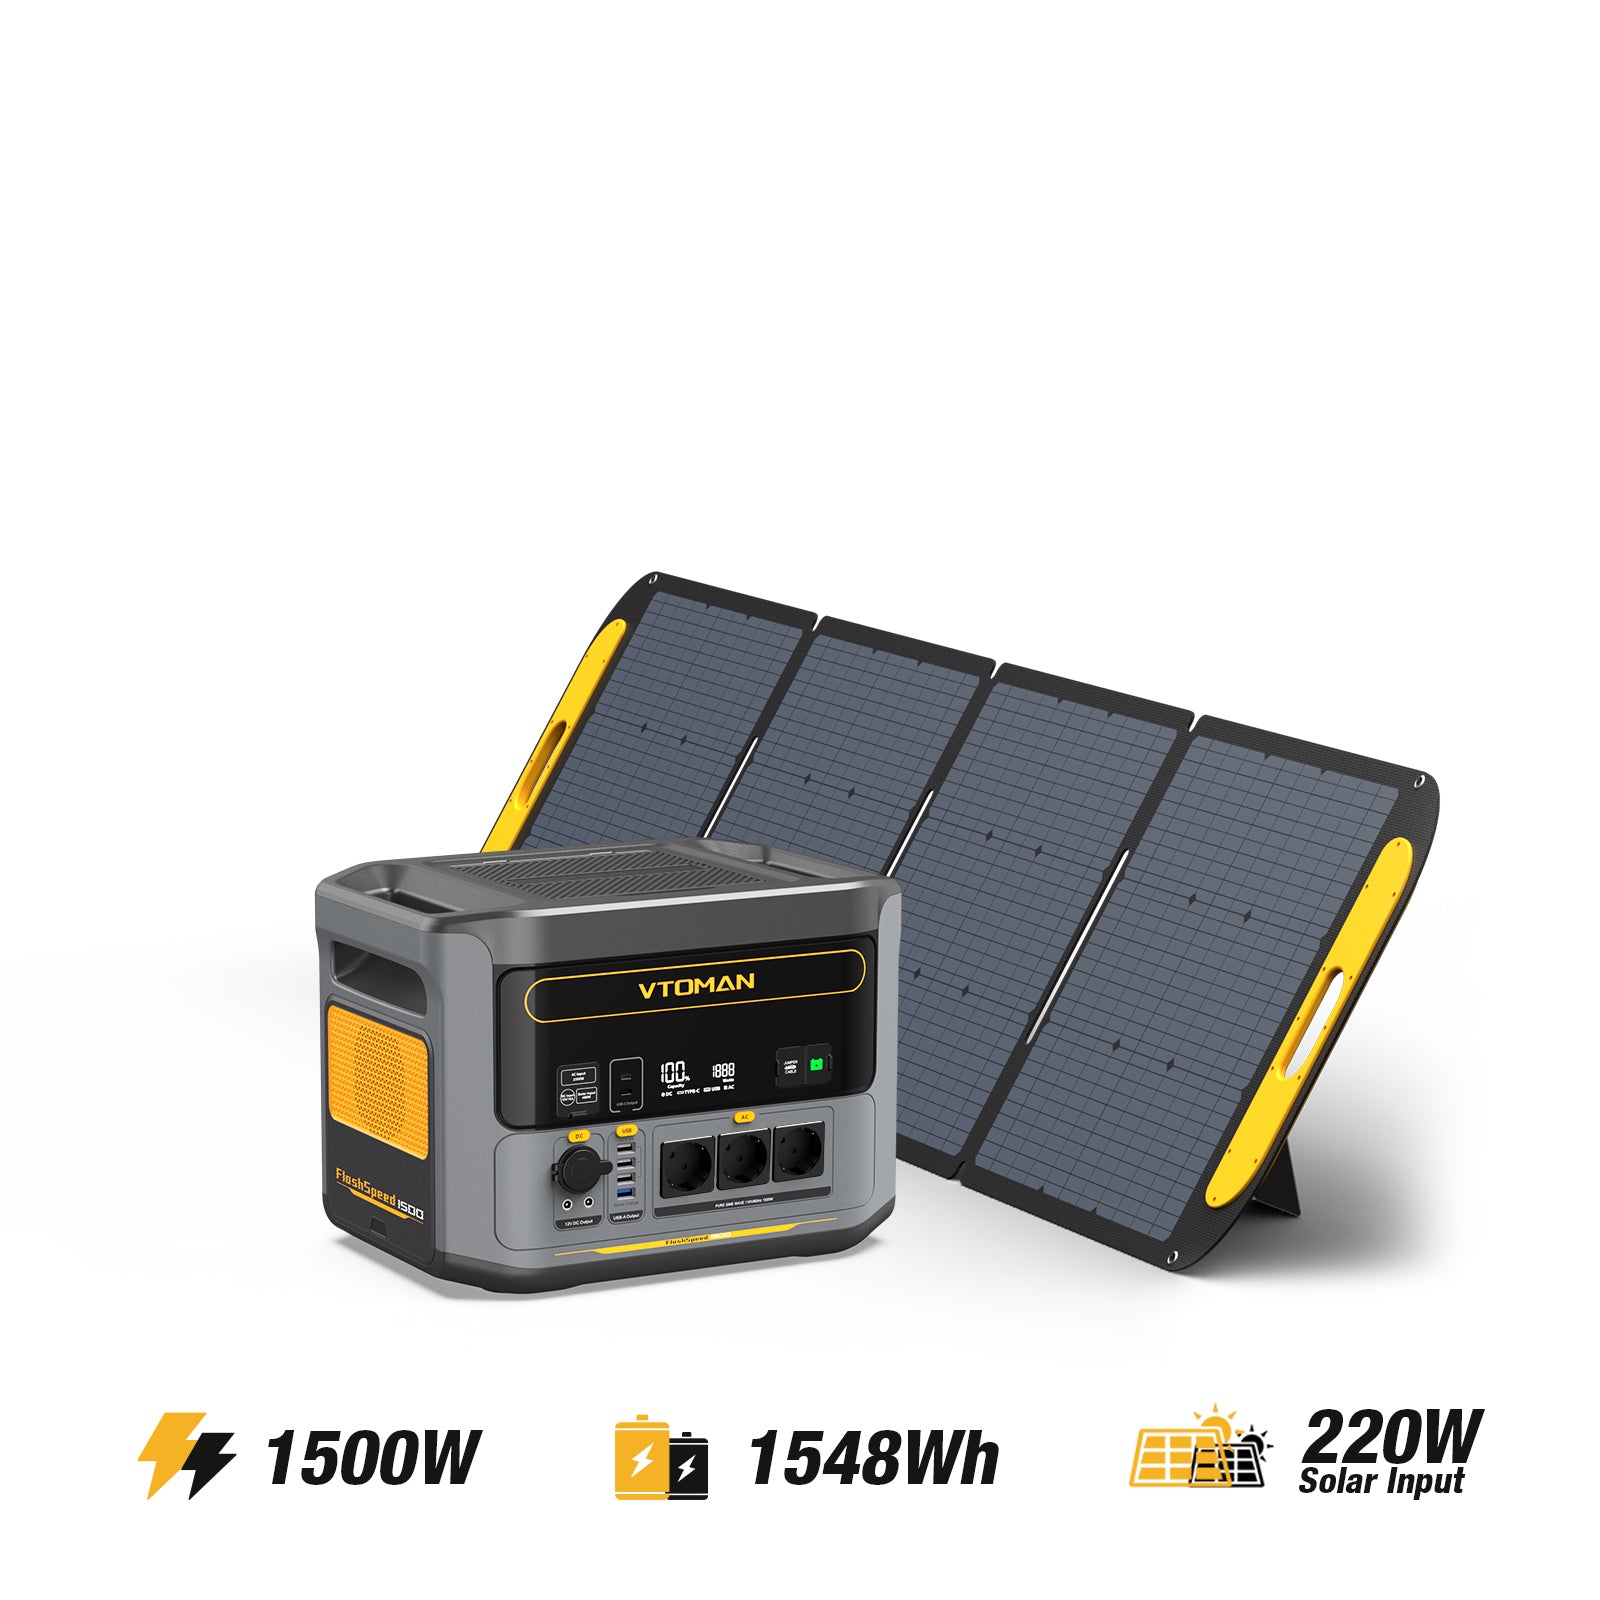 FlashSpeed 1500W/1548Wh 220W Pro Solargenerator